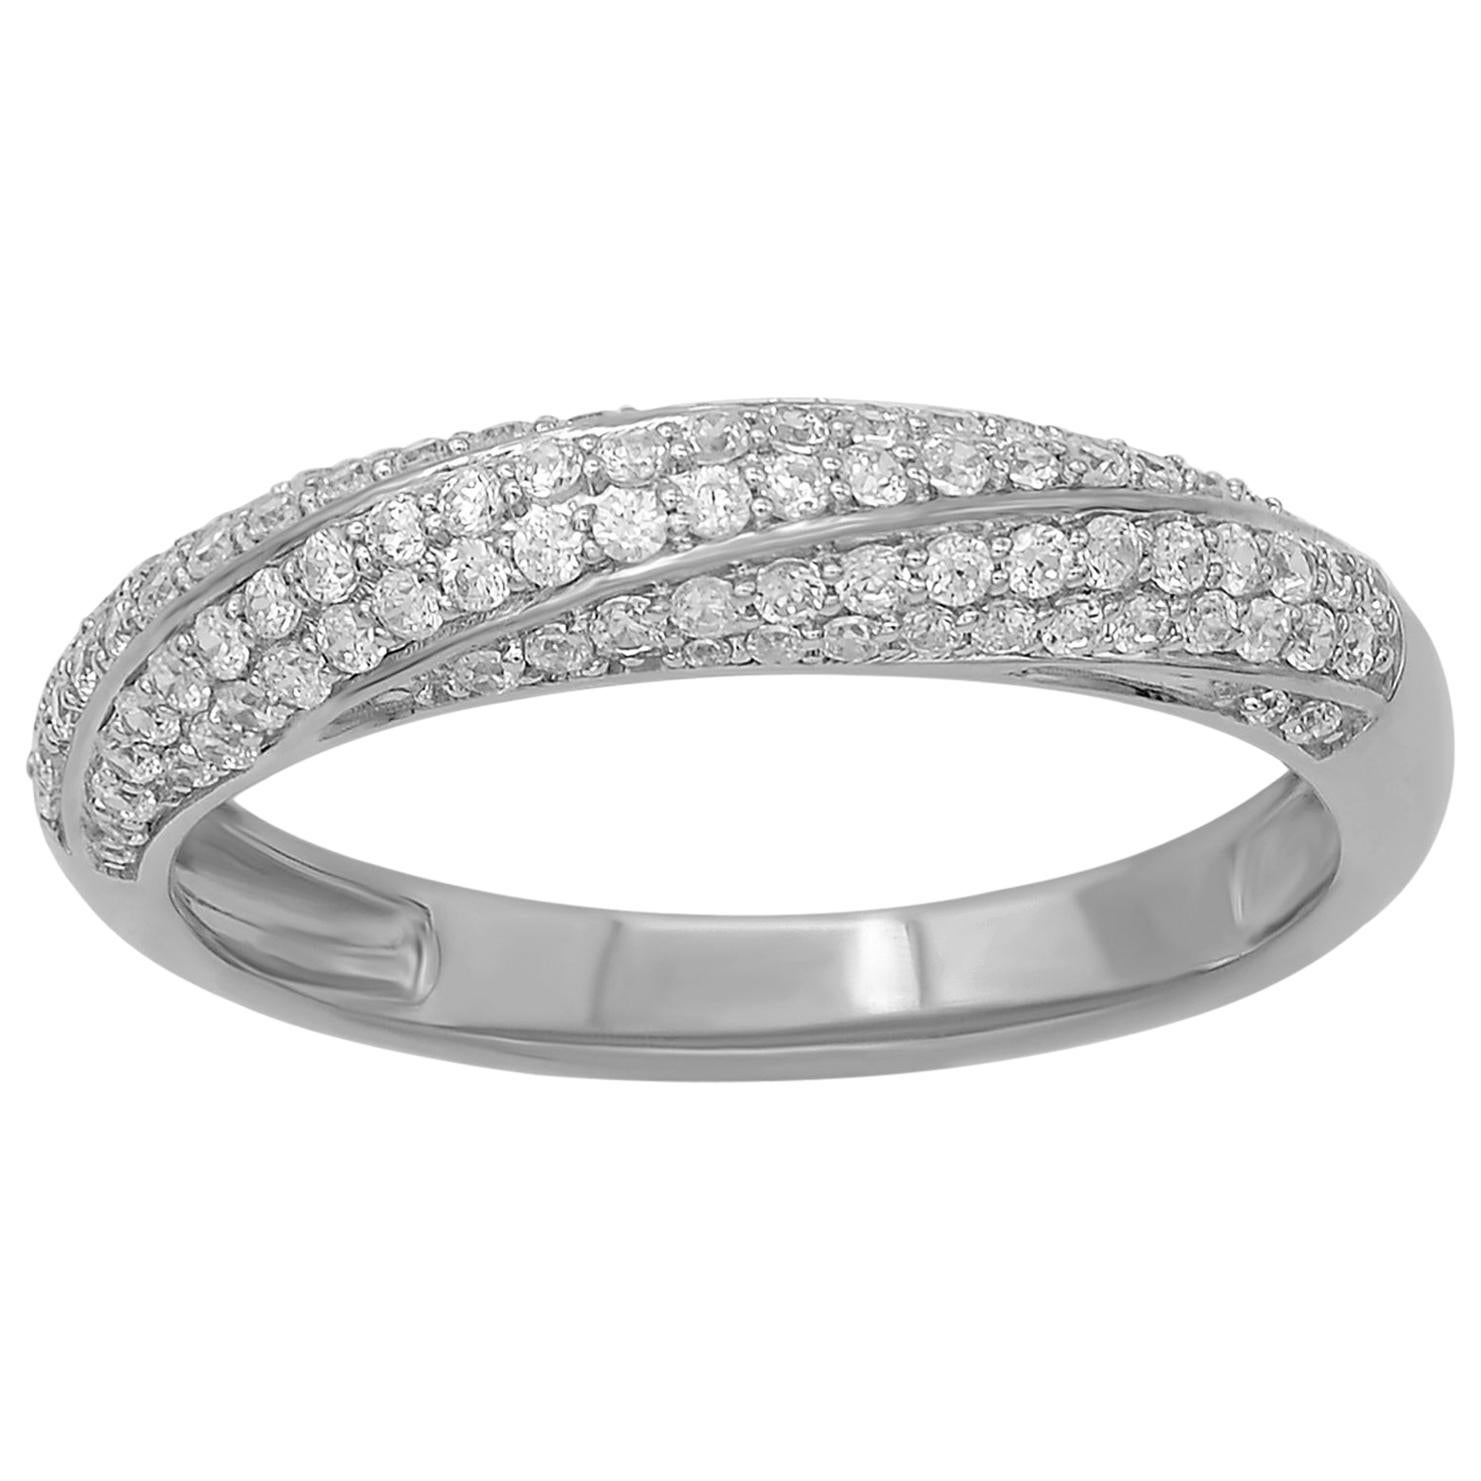 TJD 0.50 Carat Round Diamond 14K White Gold Spiral Wedding Anniversary Band Ring